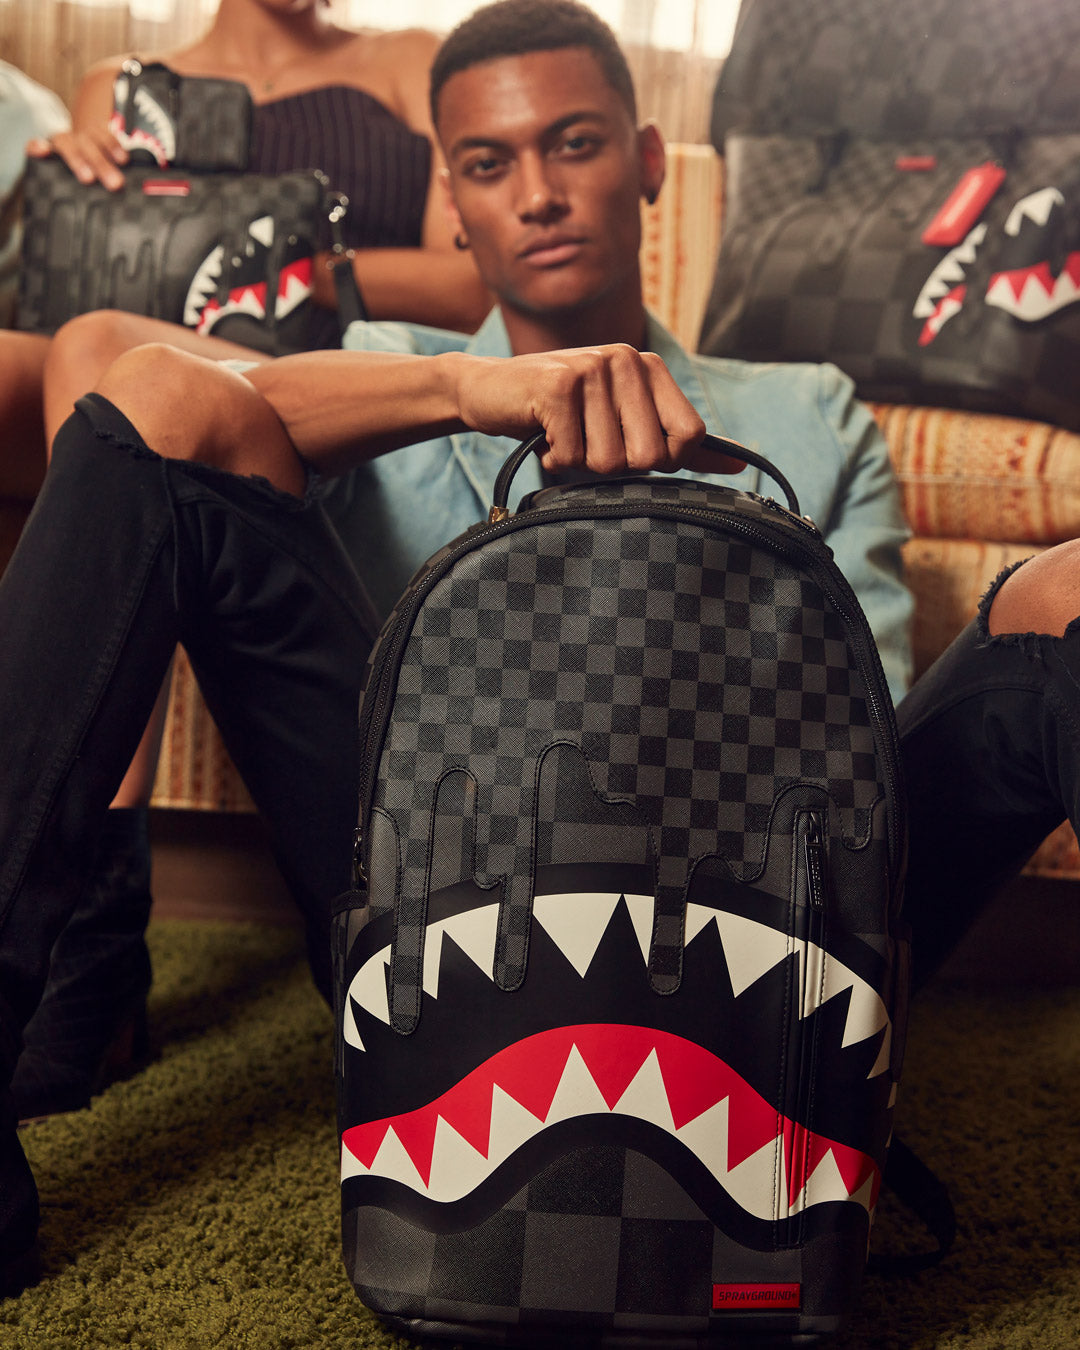 Zaino Sharks In Paris Camo Edition  Shark backpack, Backpacks, Sprayground